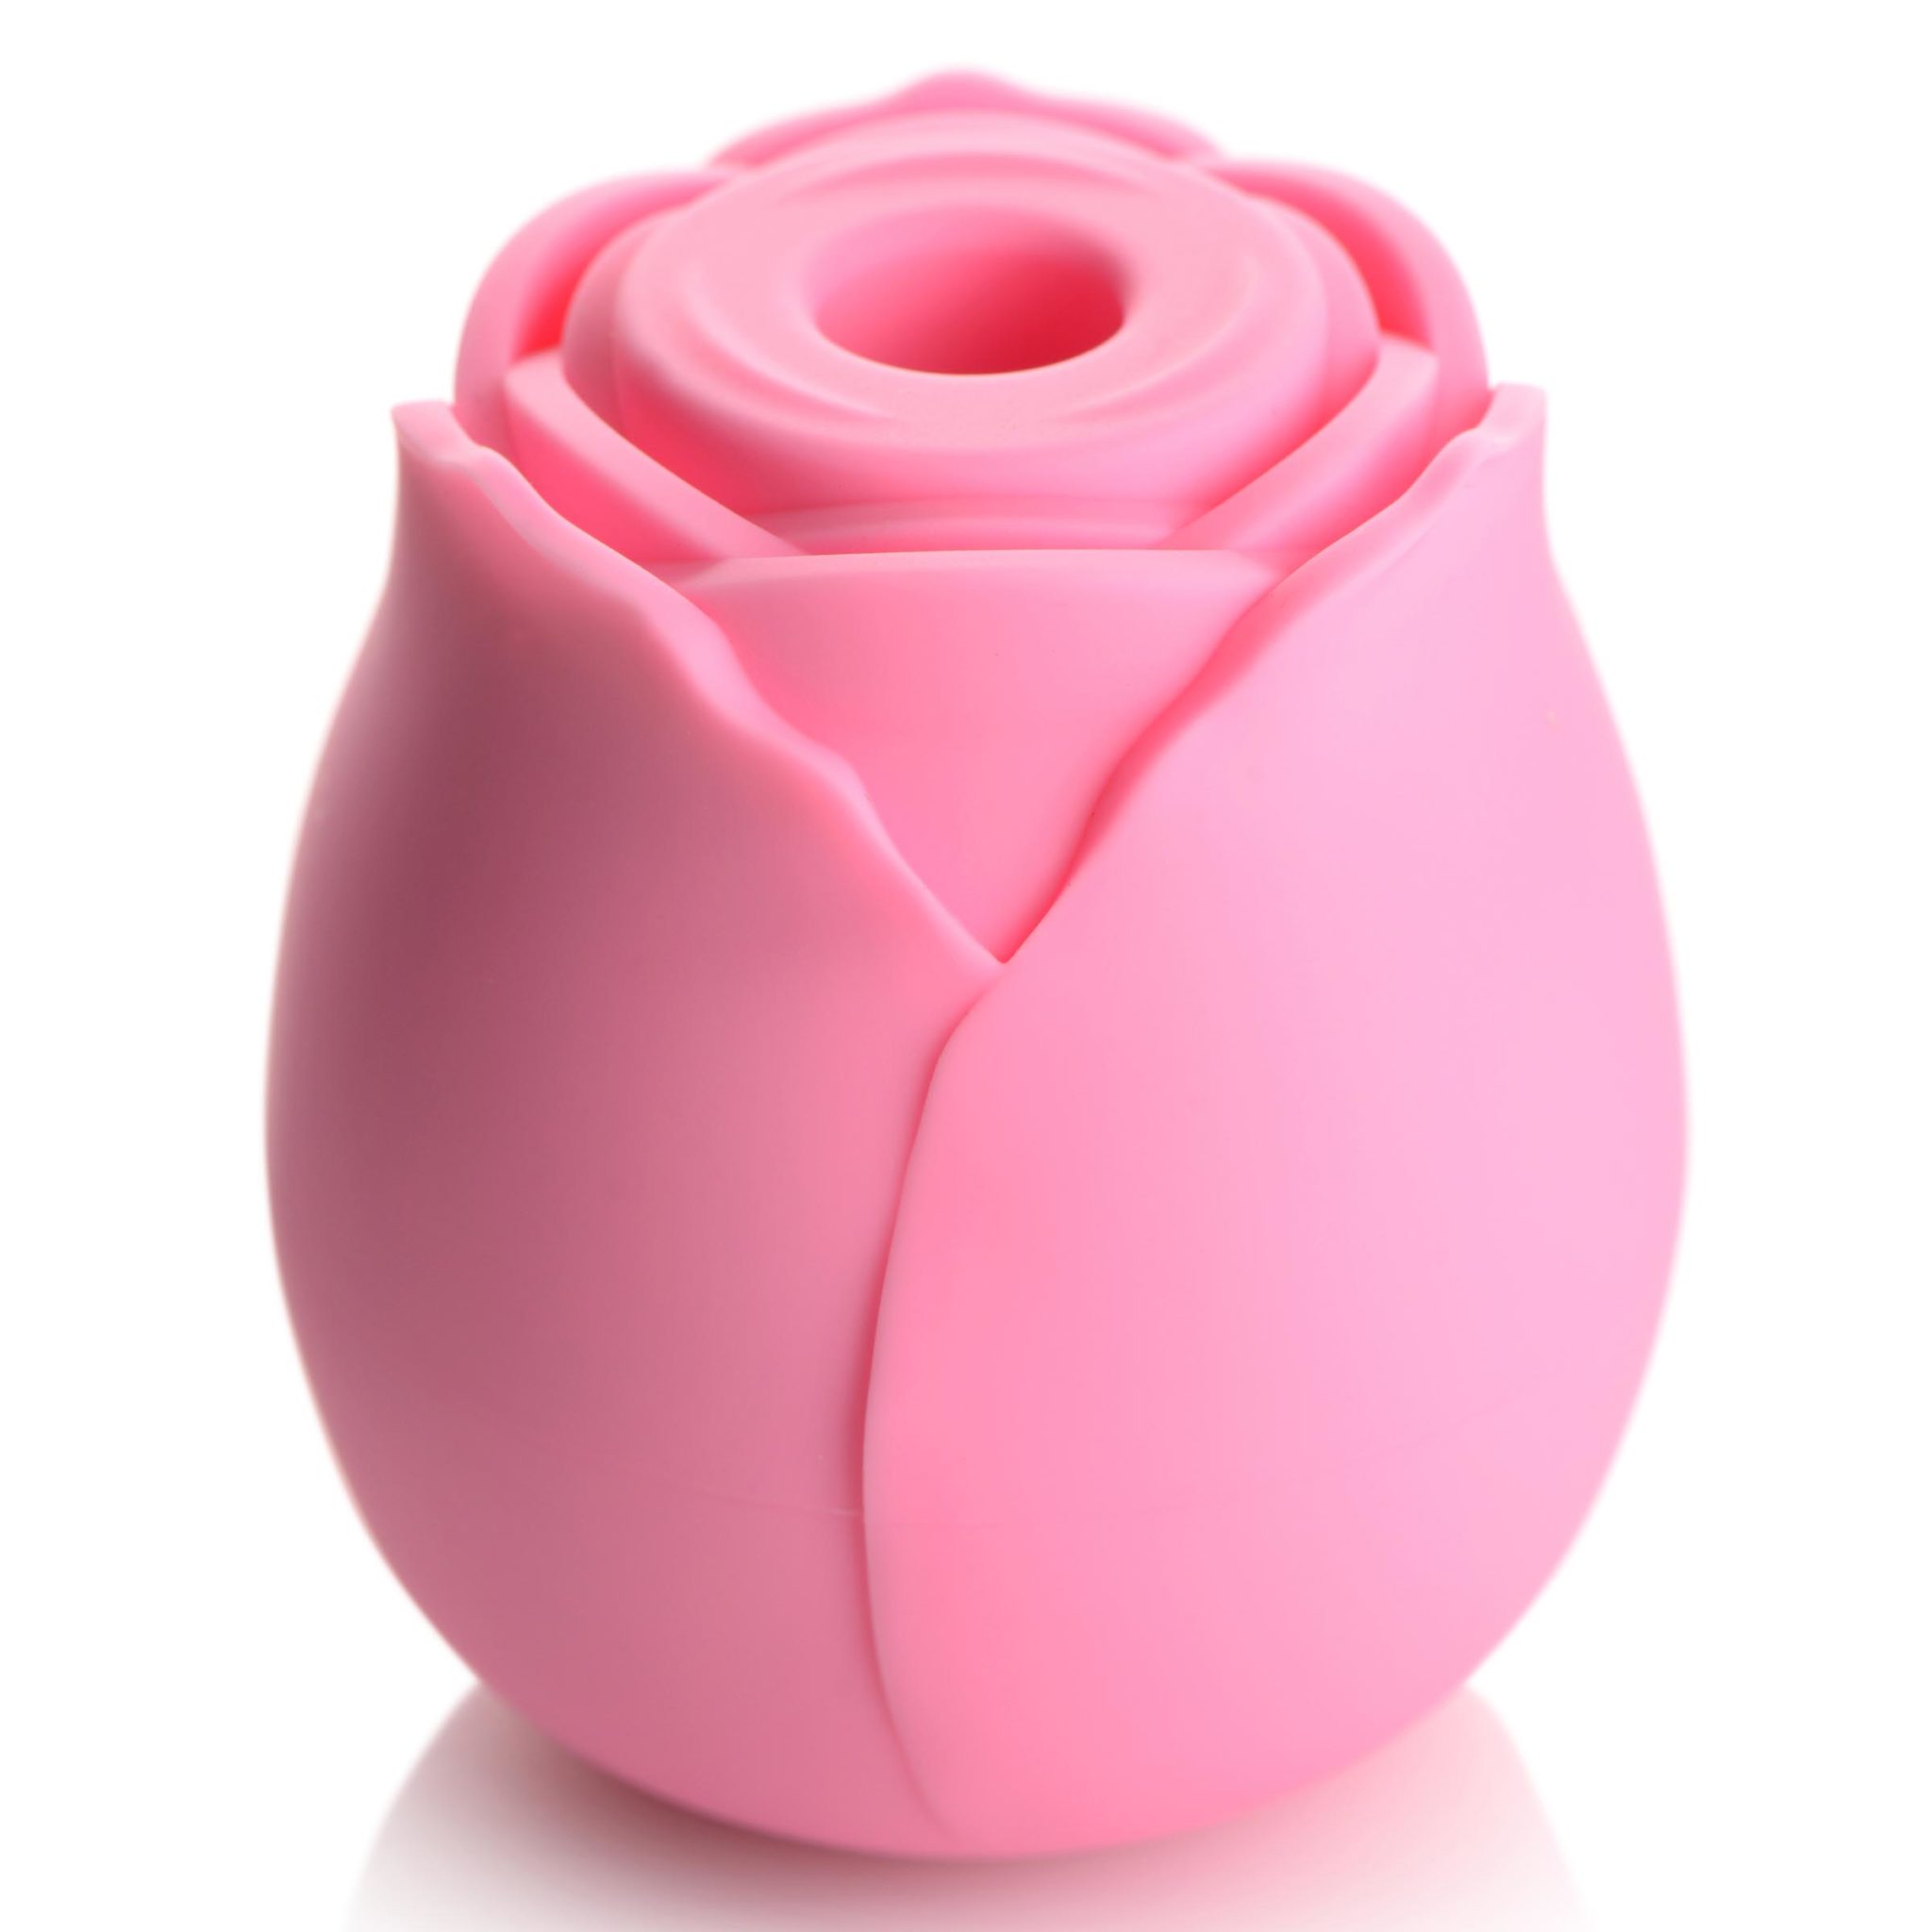 Bloomgasm Wild Rose 10X Suction Clit Stimulator – Pink